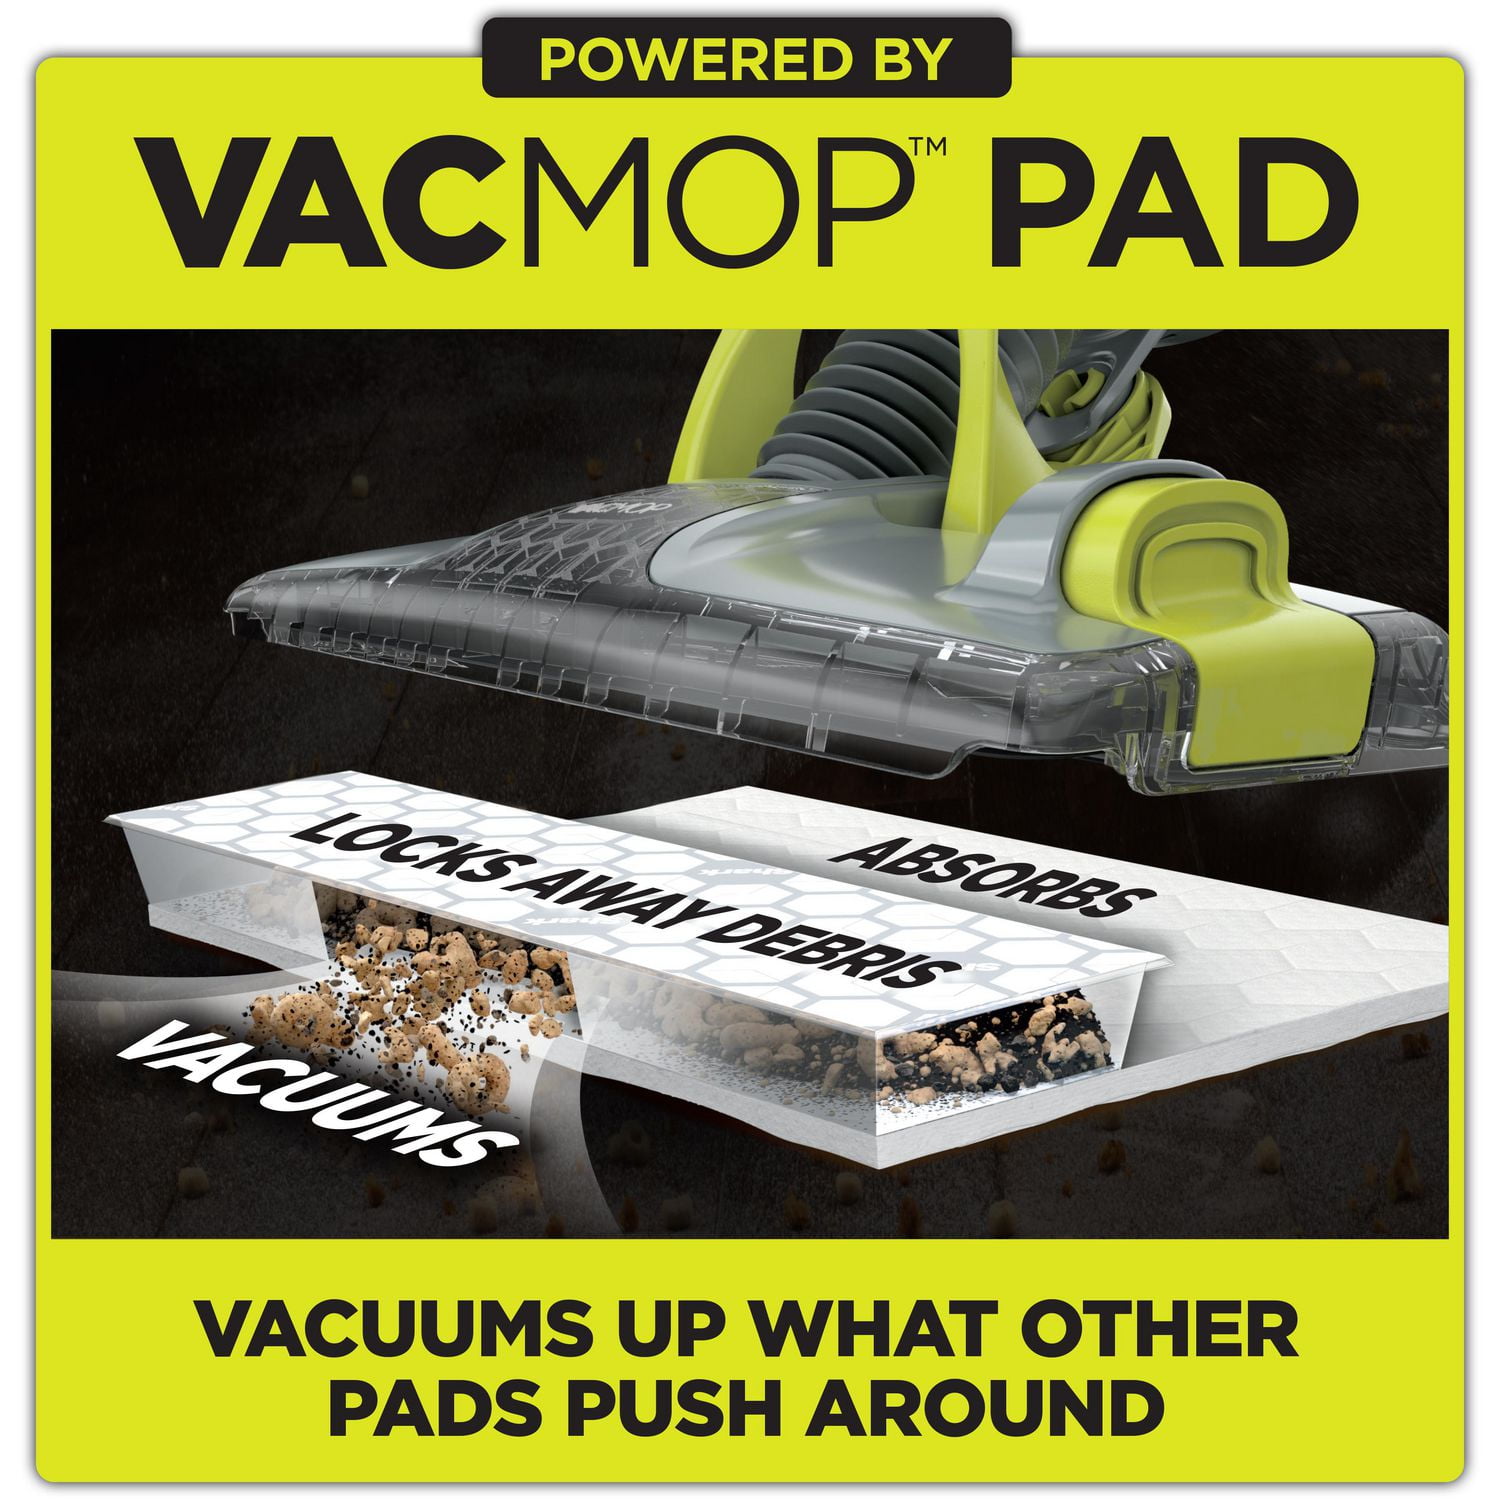 Shark Vacmop Reusable Debris Tray & Mop Pad CLEARANCE SALE 